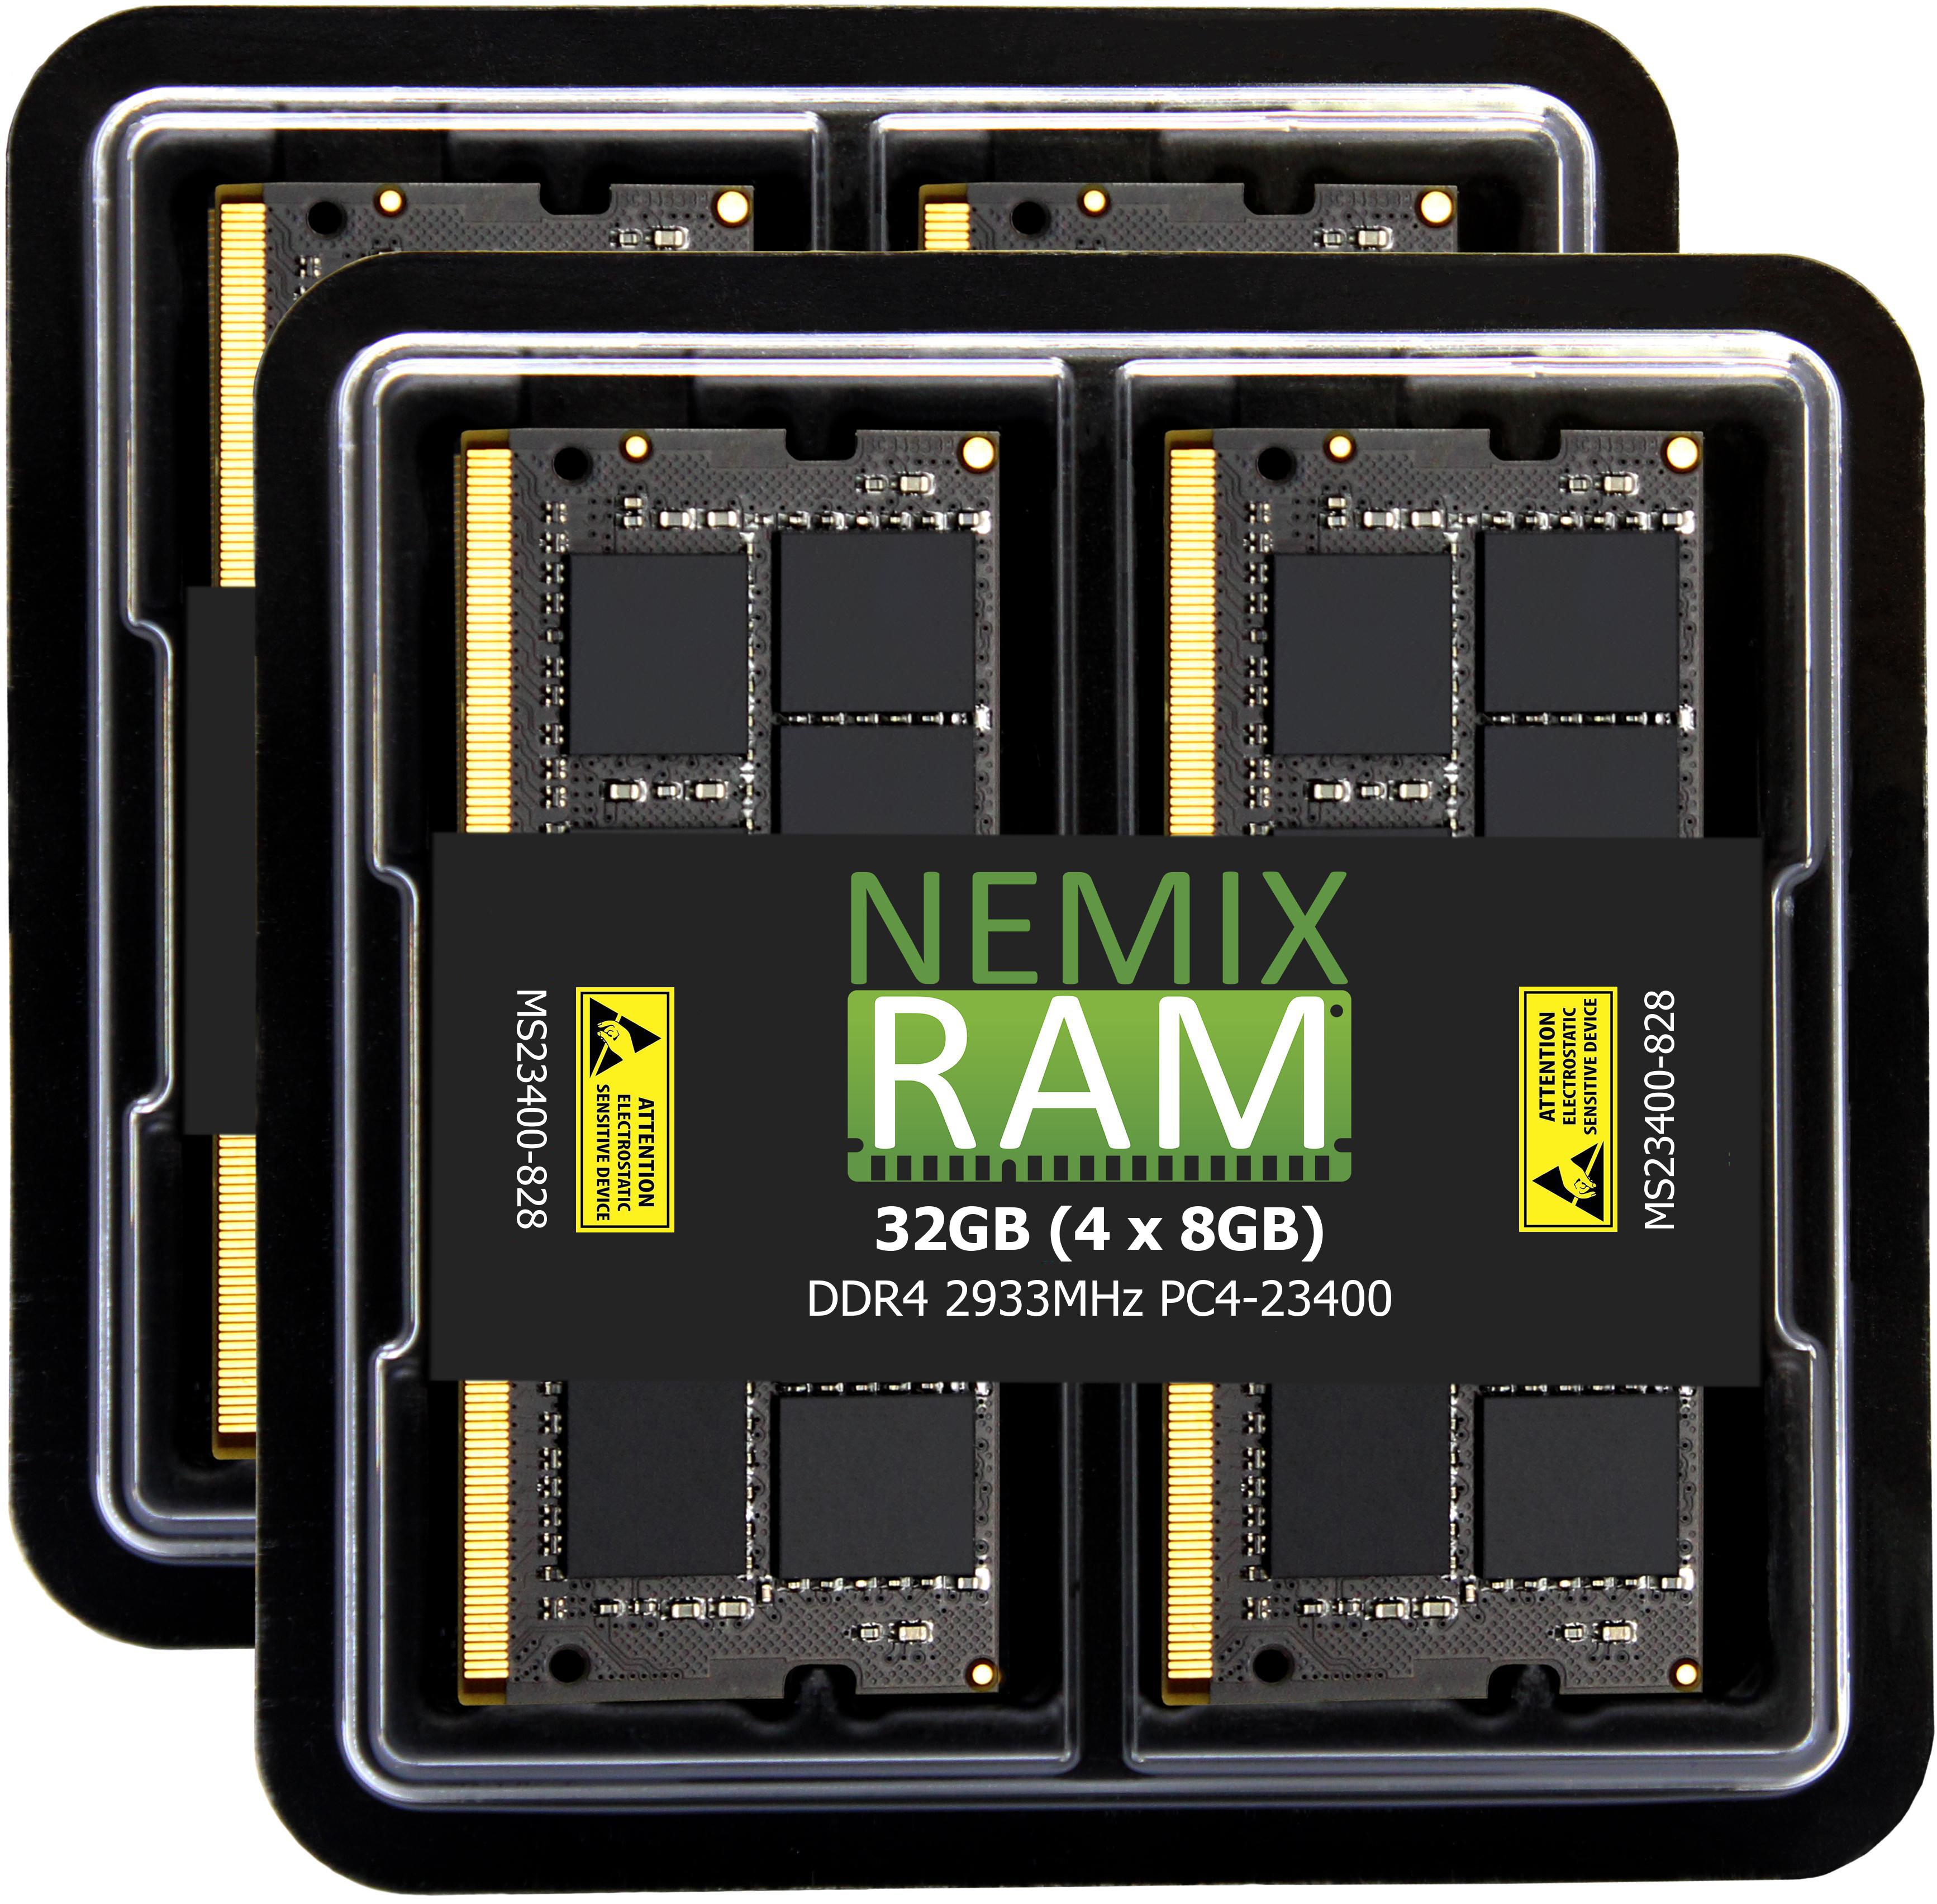 DDR4 2933MHZ PC4-23400 SODIMM 2RX8